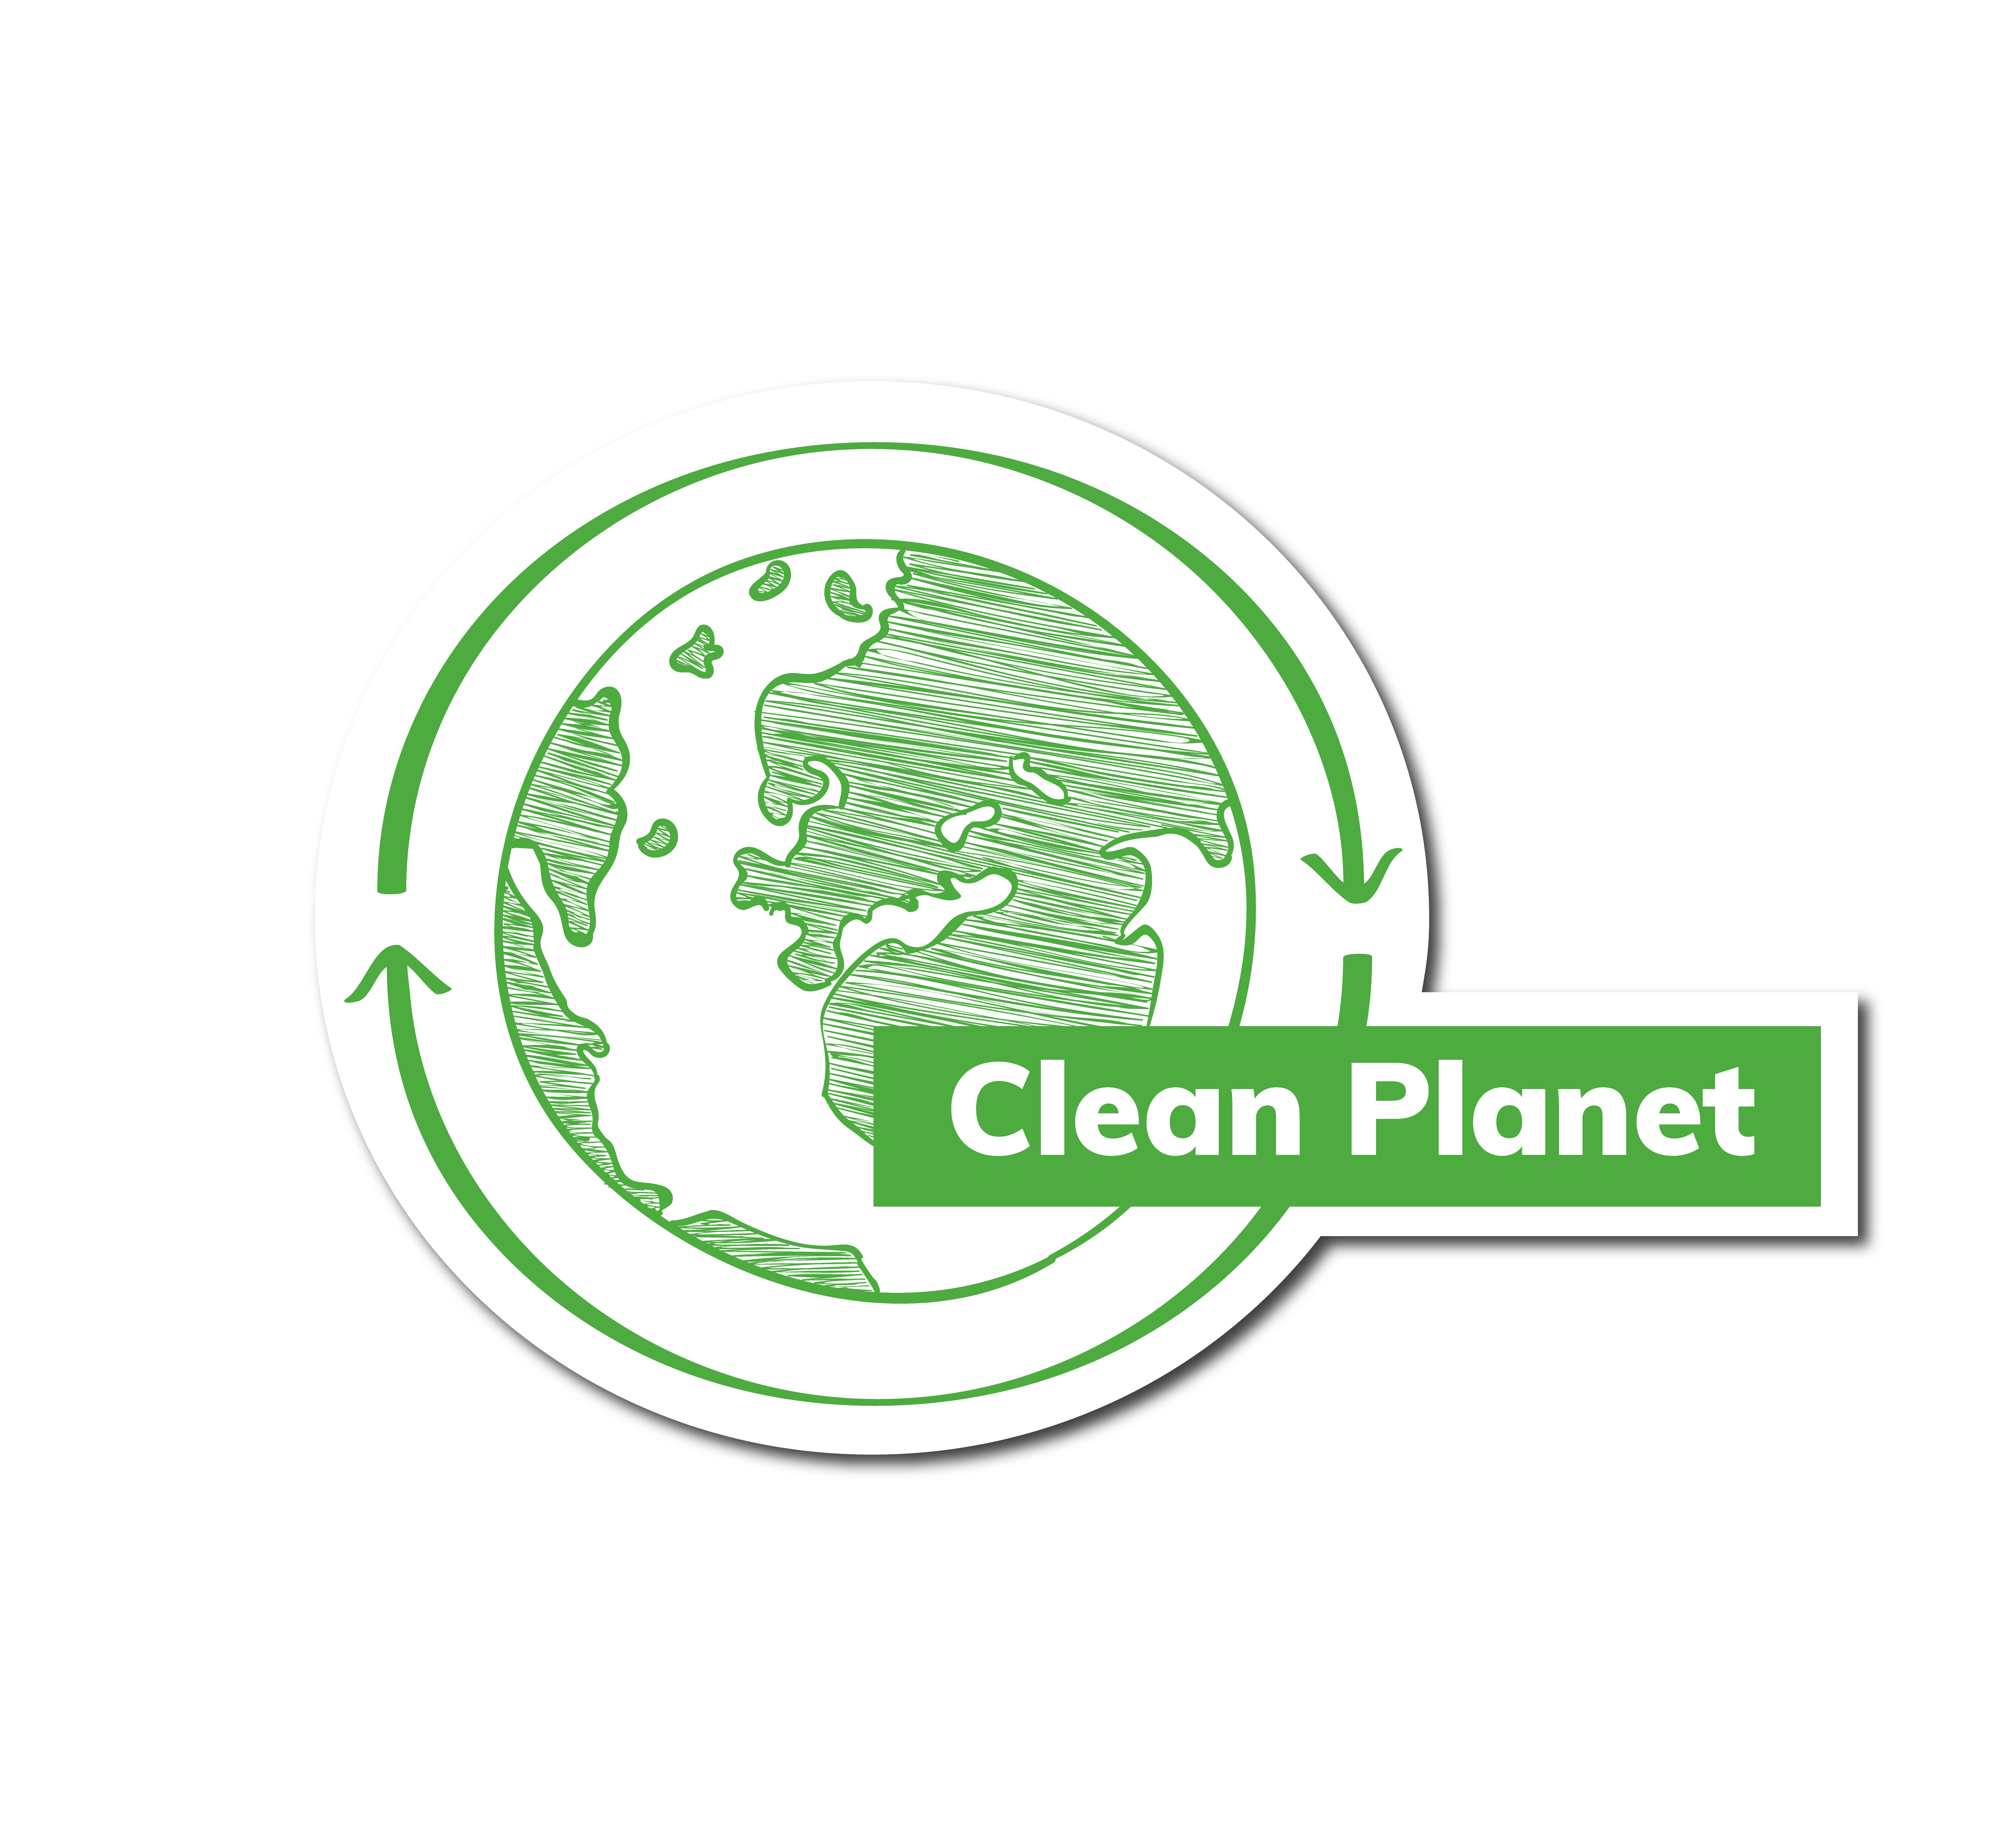 logo_clean_planet_Plan-de-travail-1-copie-3-1.png